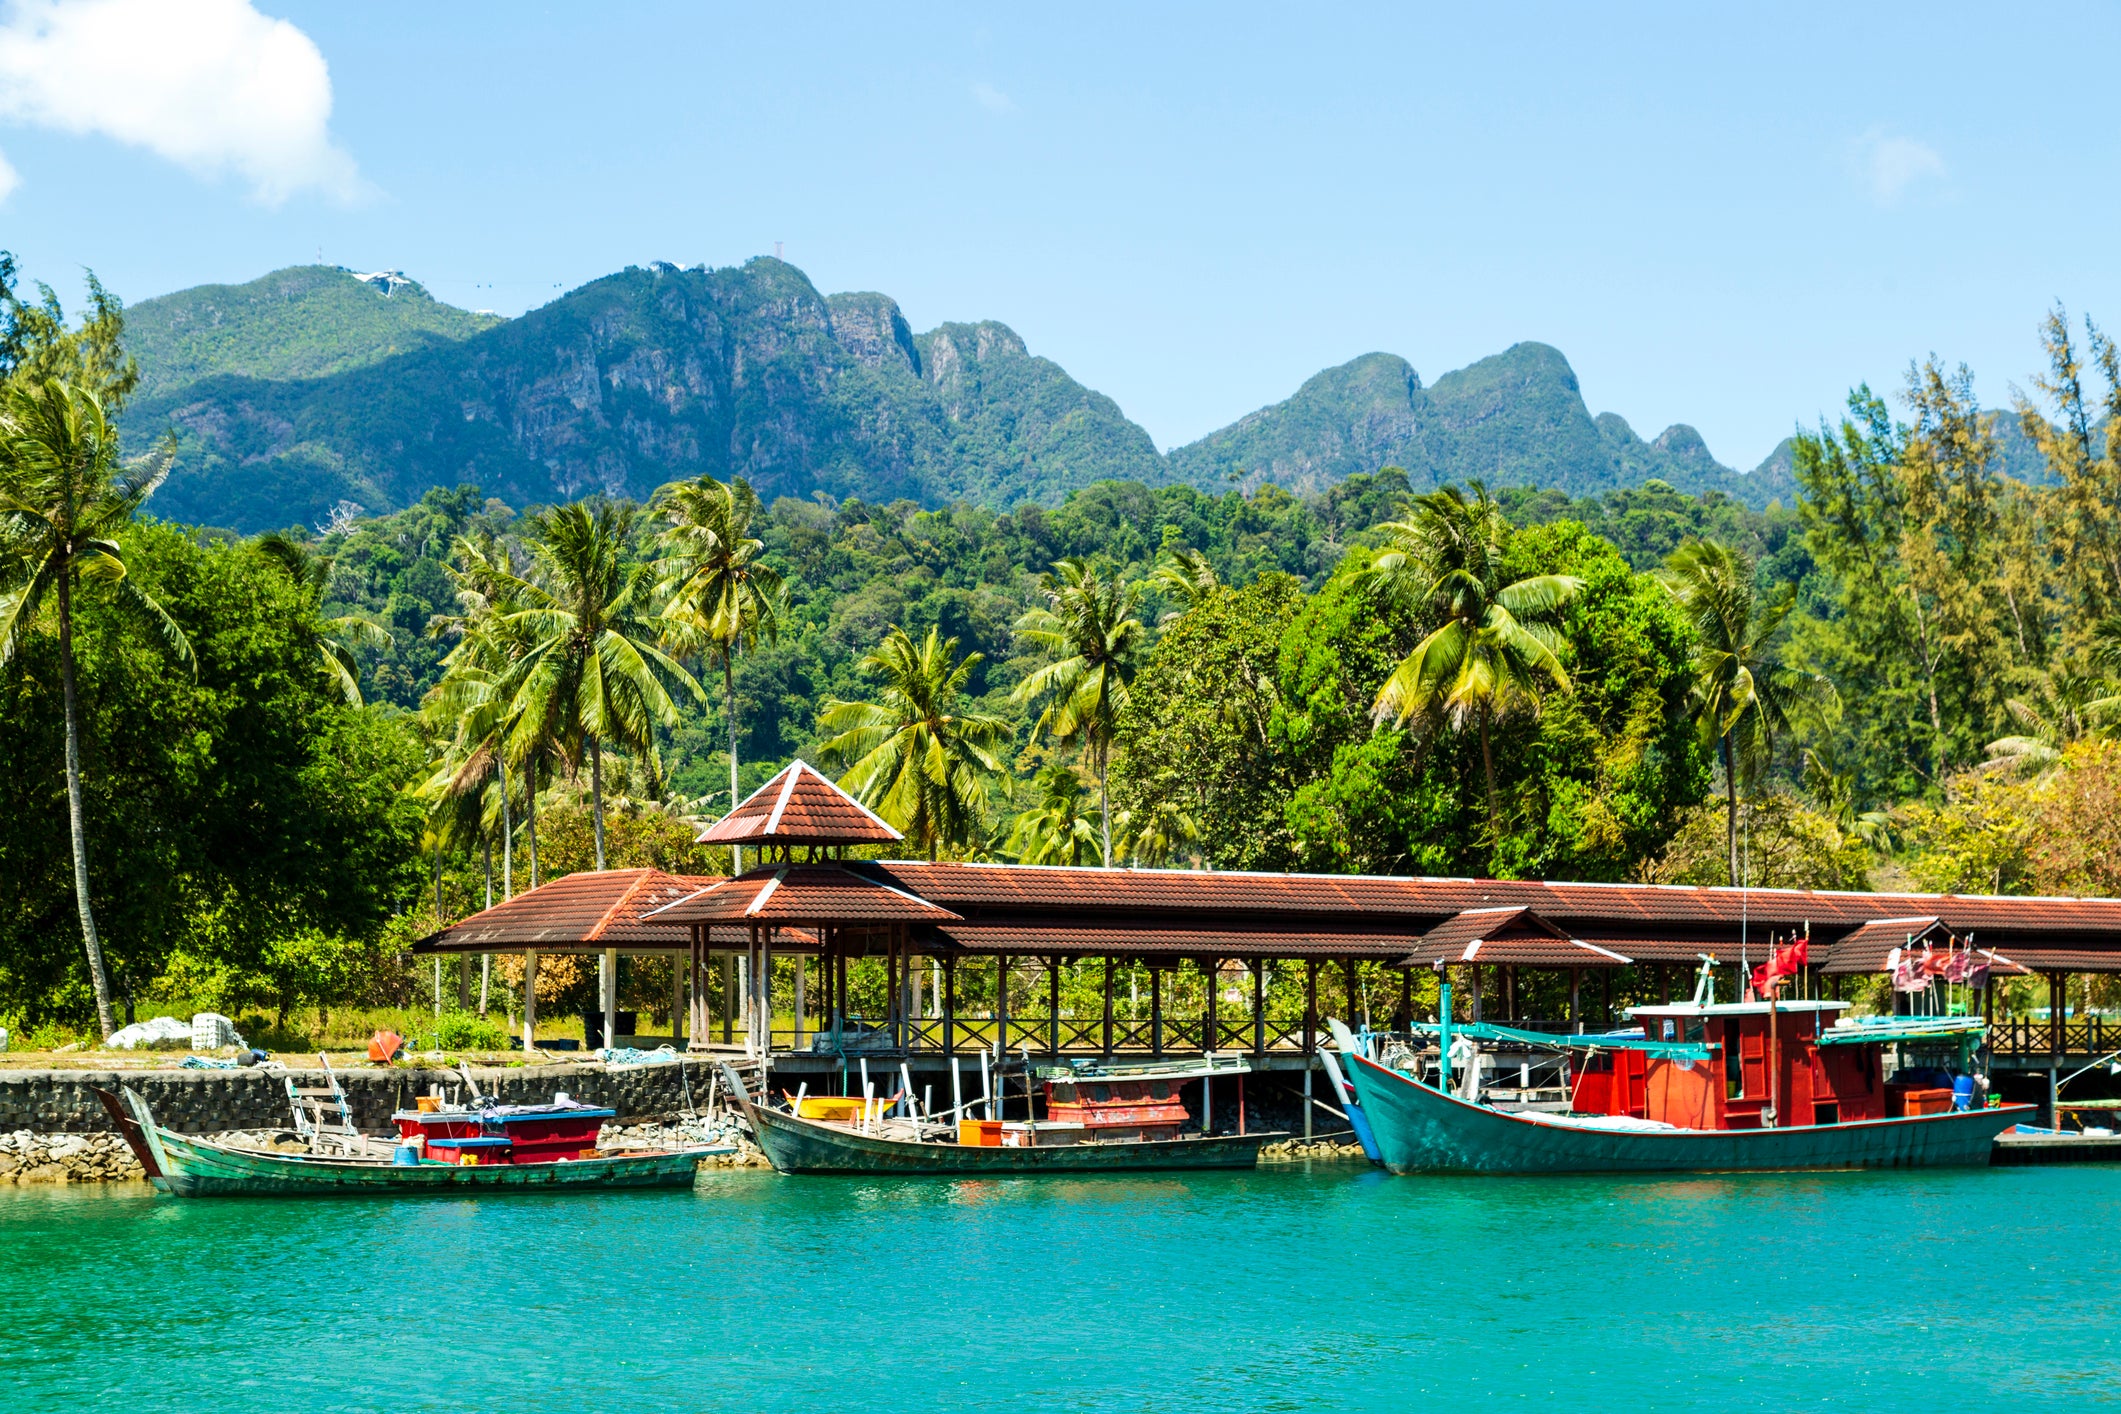 For an idyllic slice of Southeast Asia, visit Langkawi island